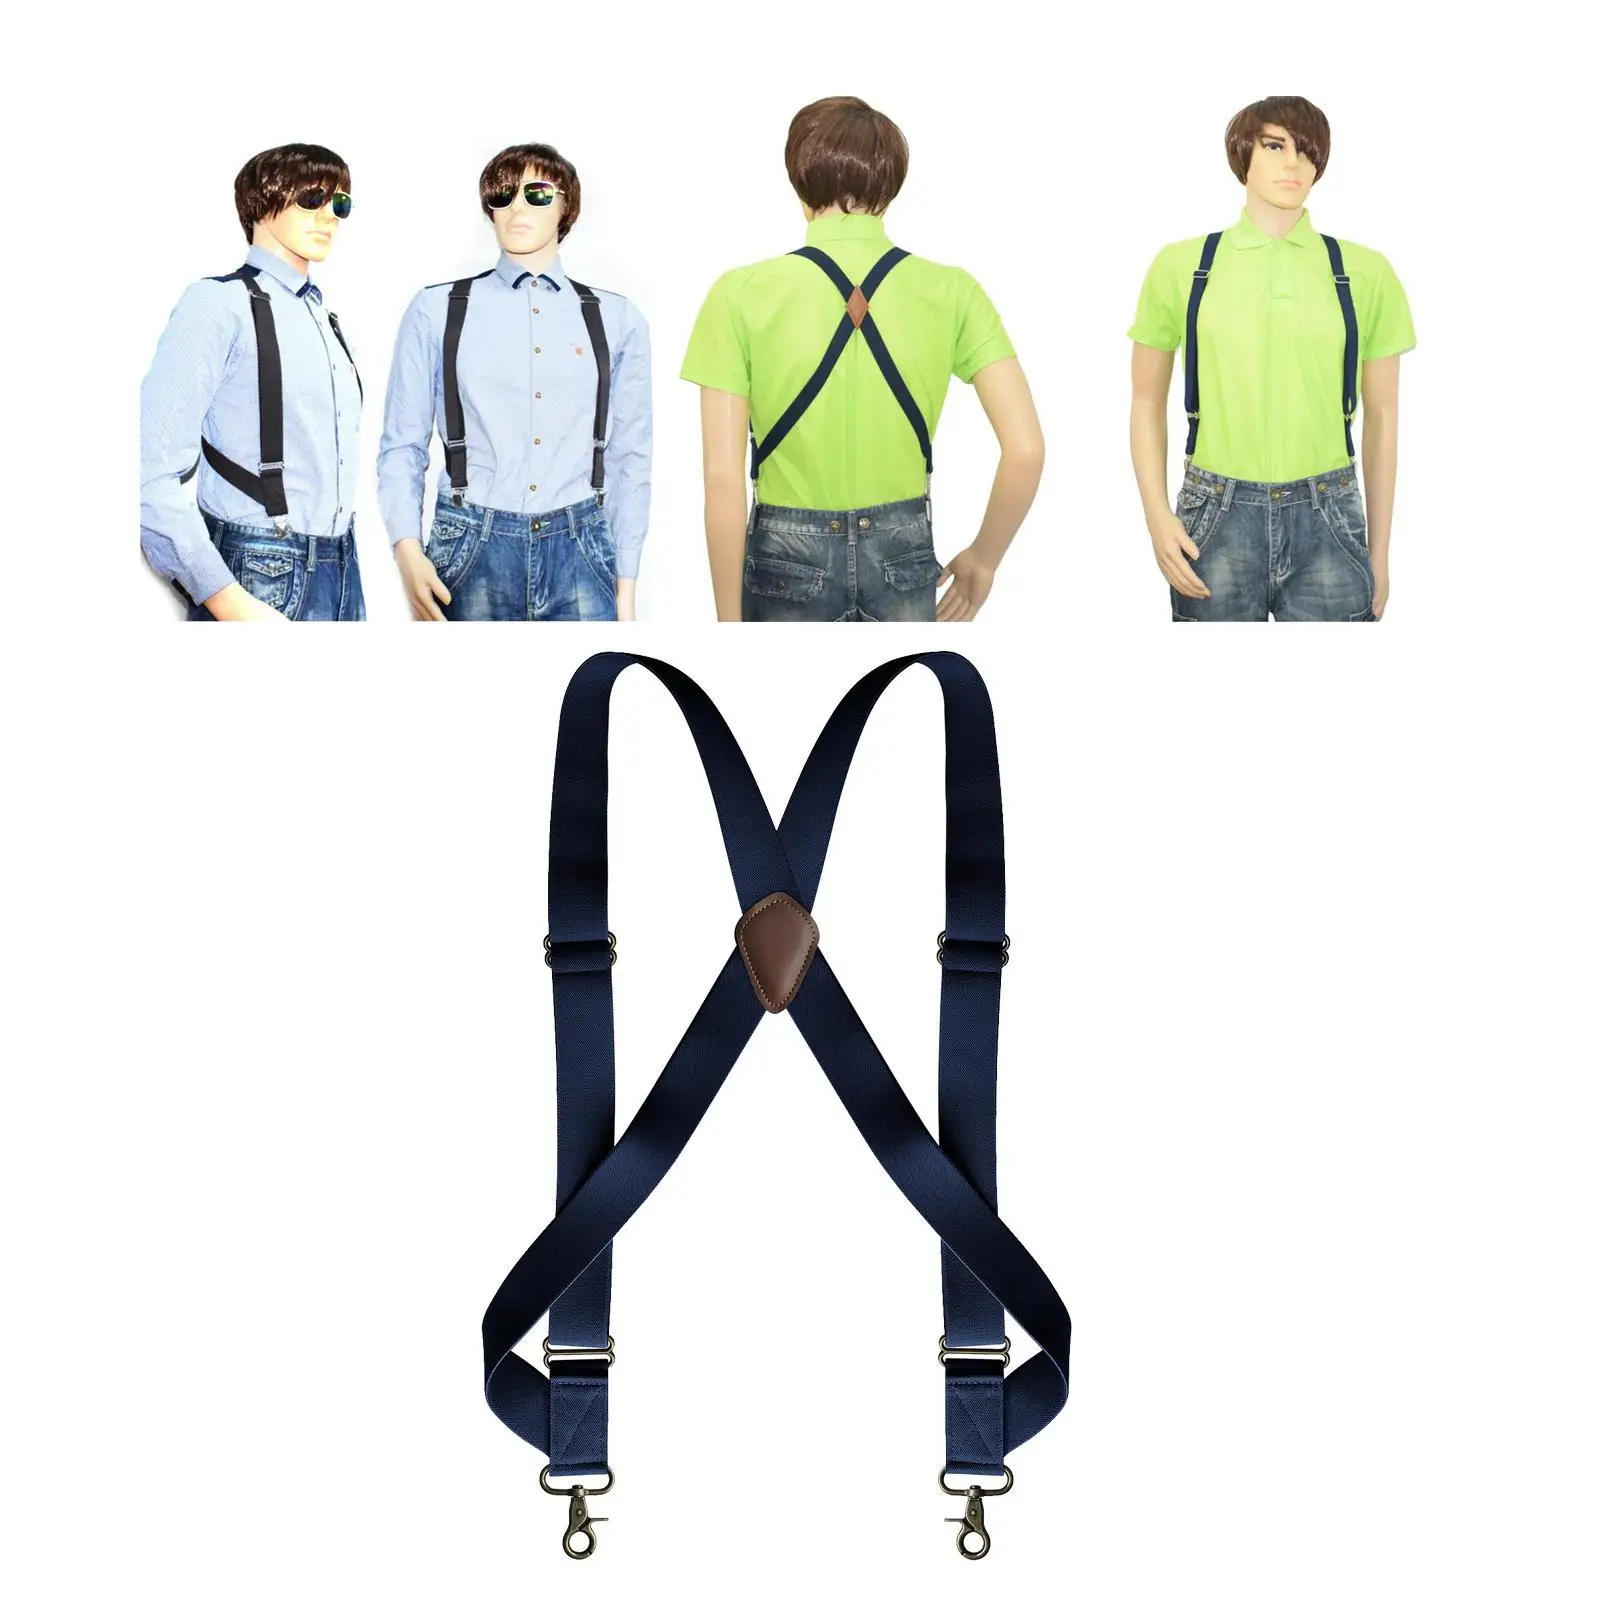 Suspenders for Men, Adjustable Suspenders with Elastic Straps, X Type Construction for Work